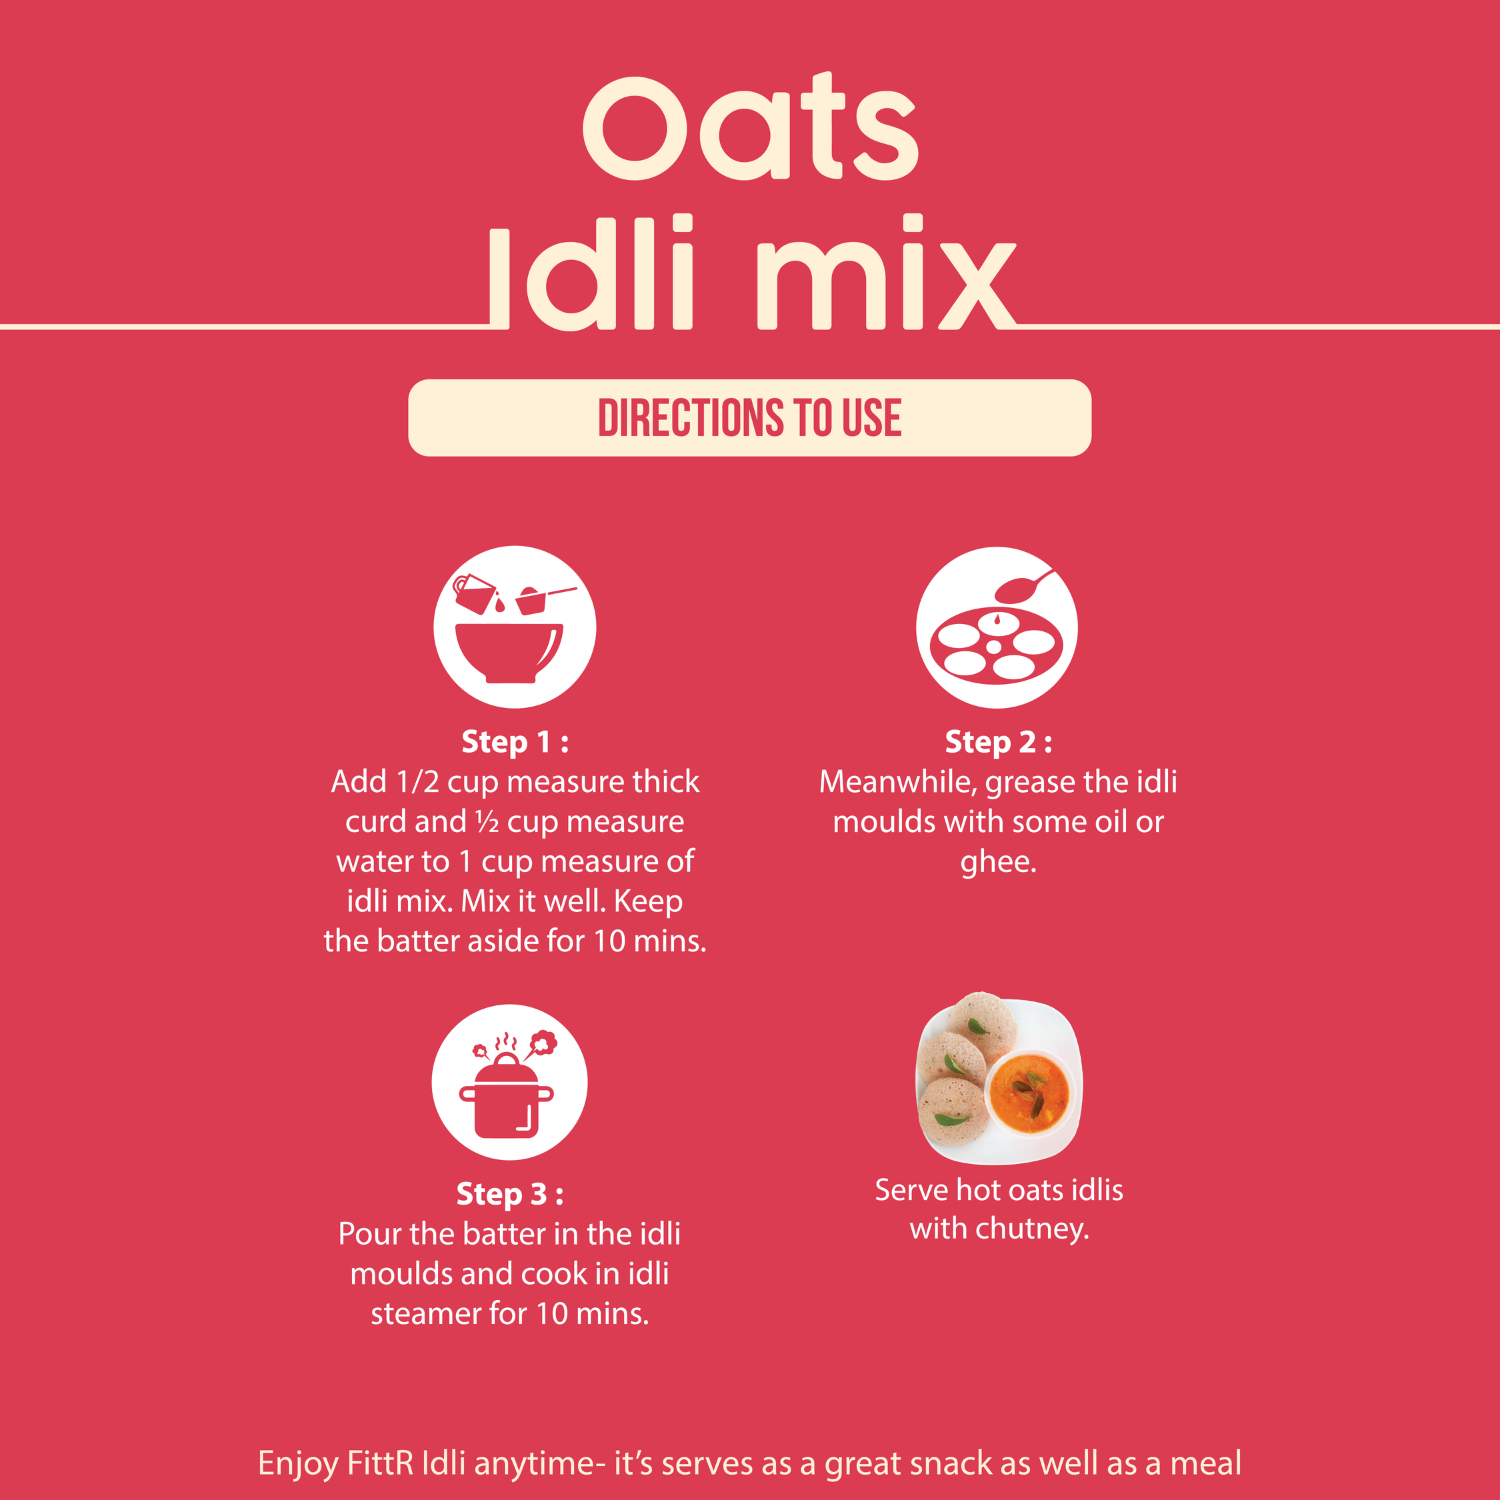 Oats Idli Mix | Healthy Breakfast | 325 Gms, 15-16 Idlis